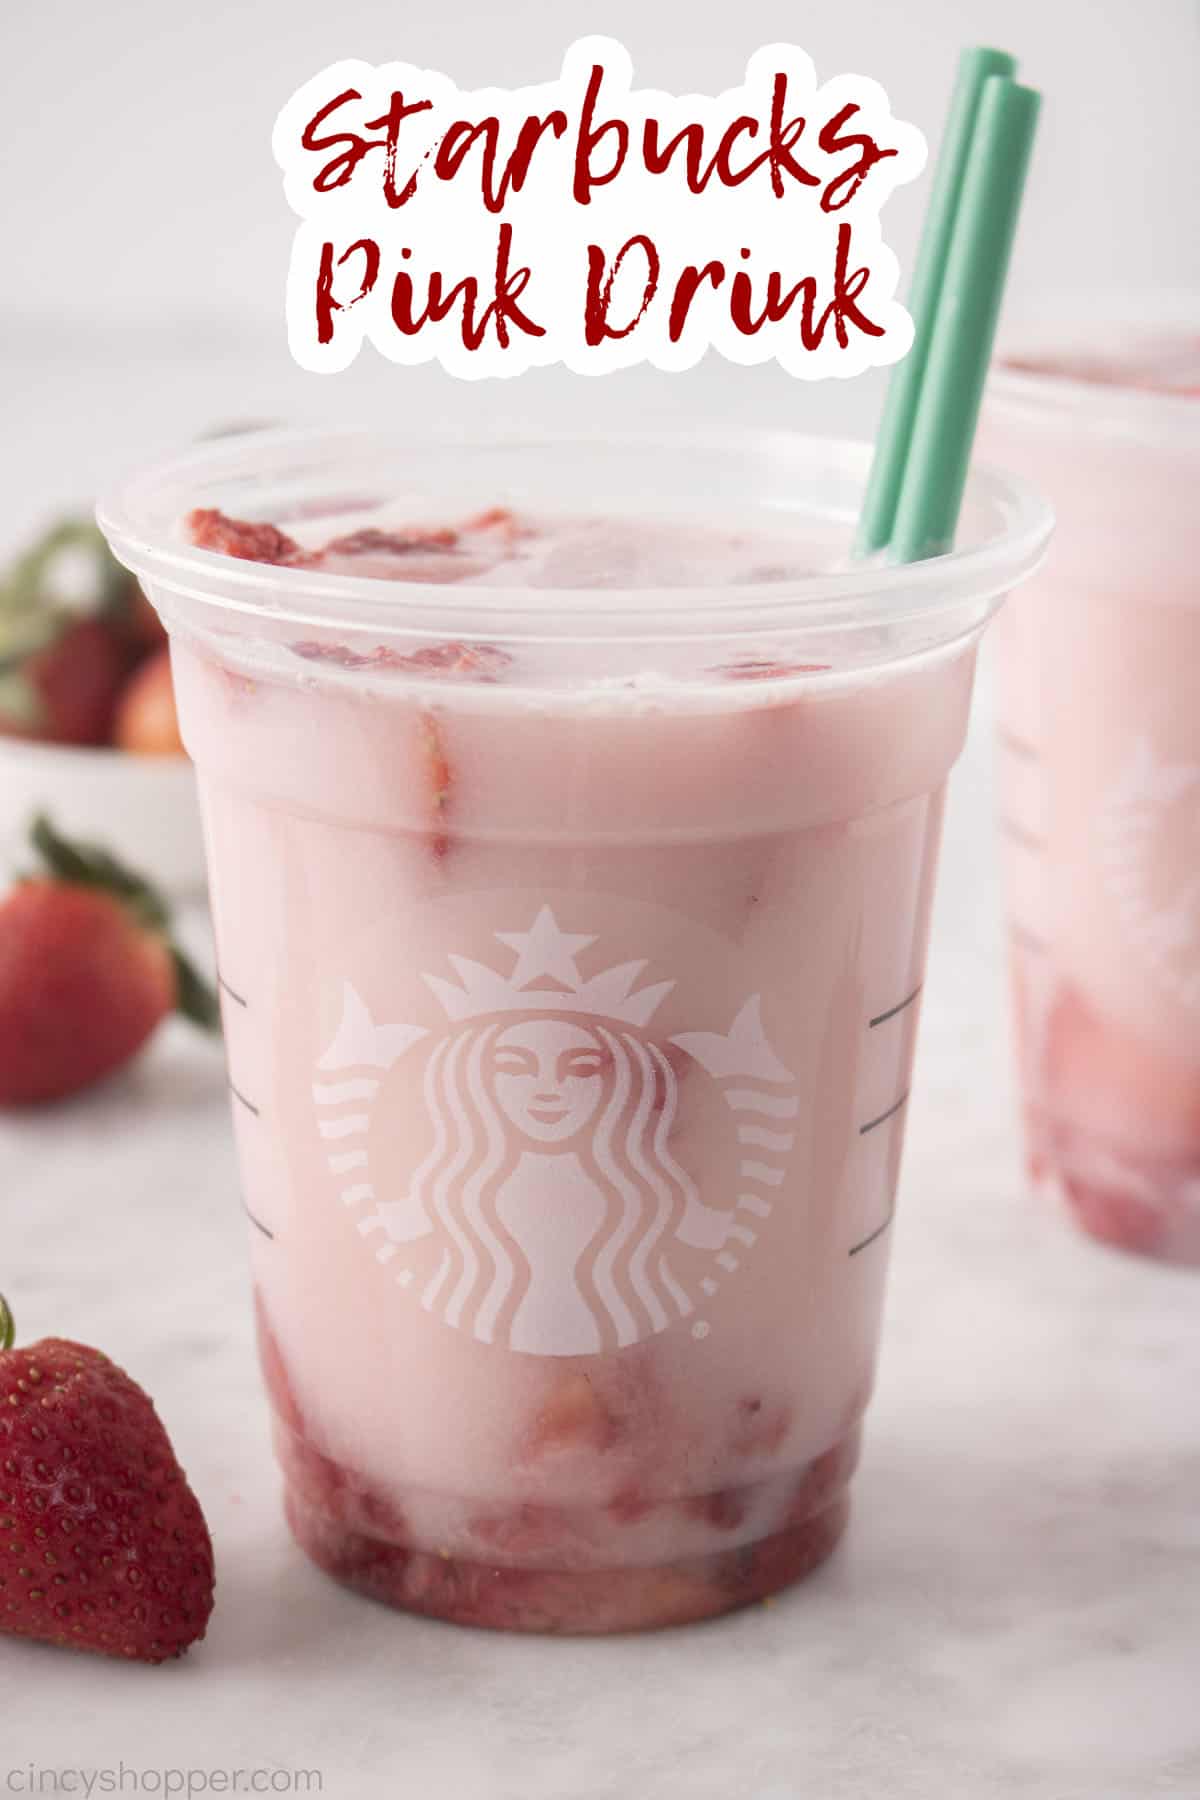 Text on image Starbucks Pink Drink.